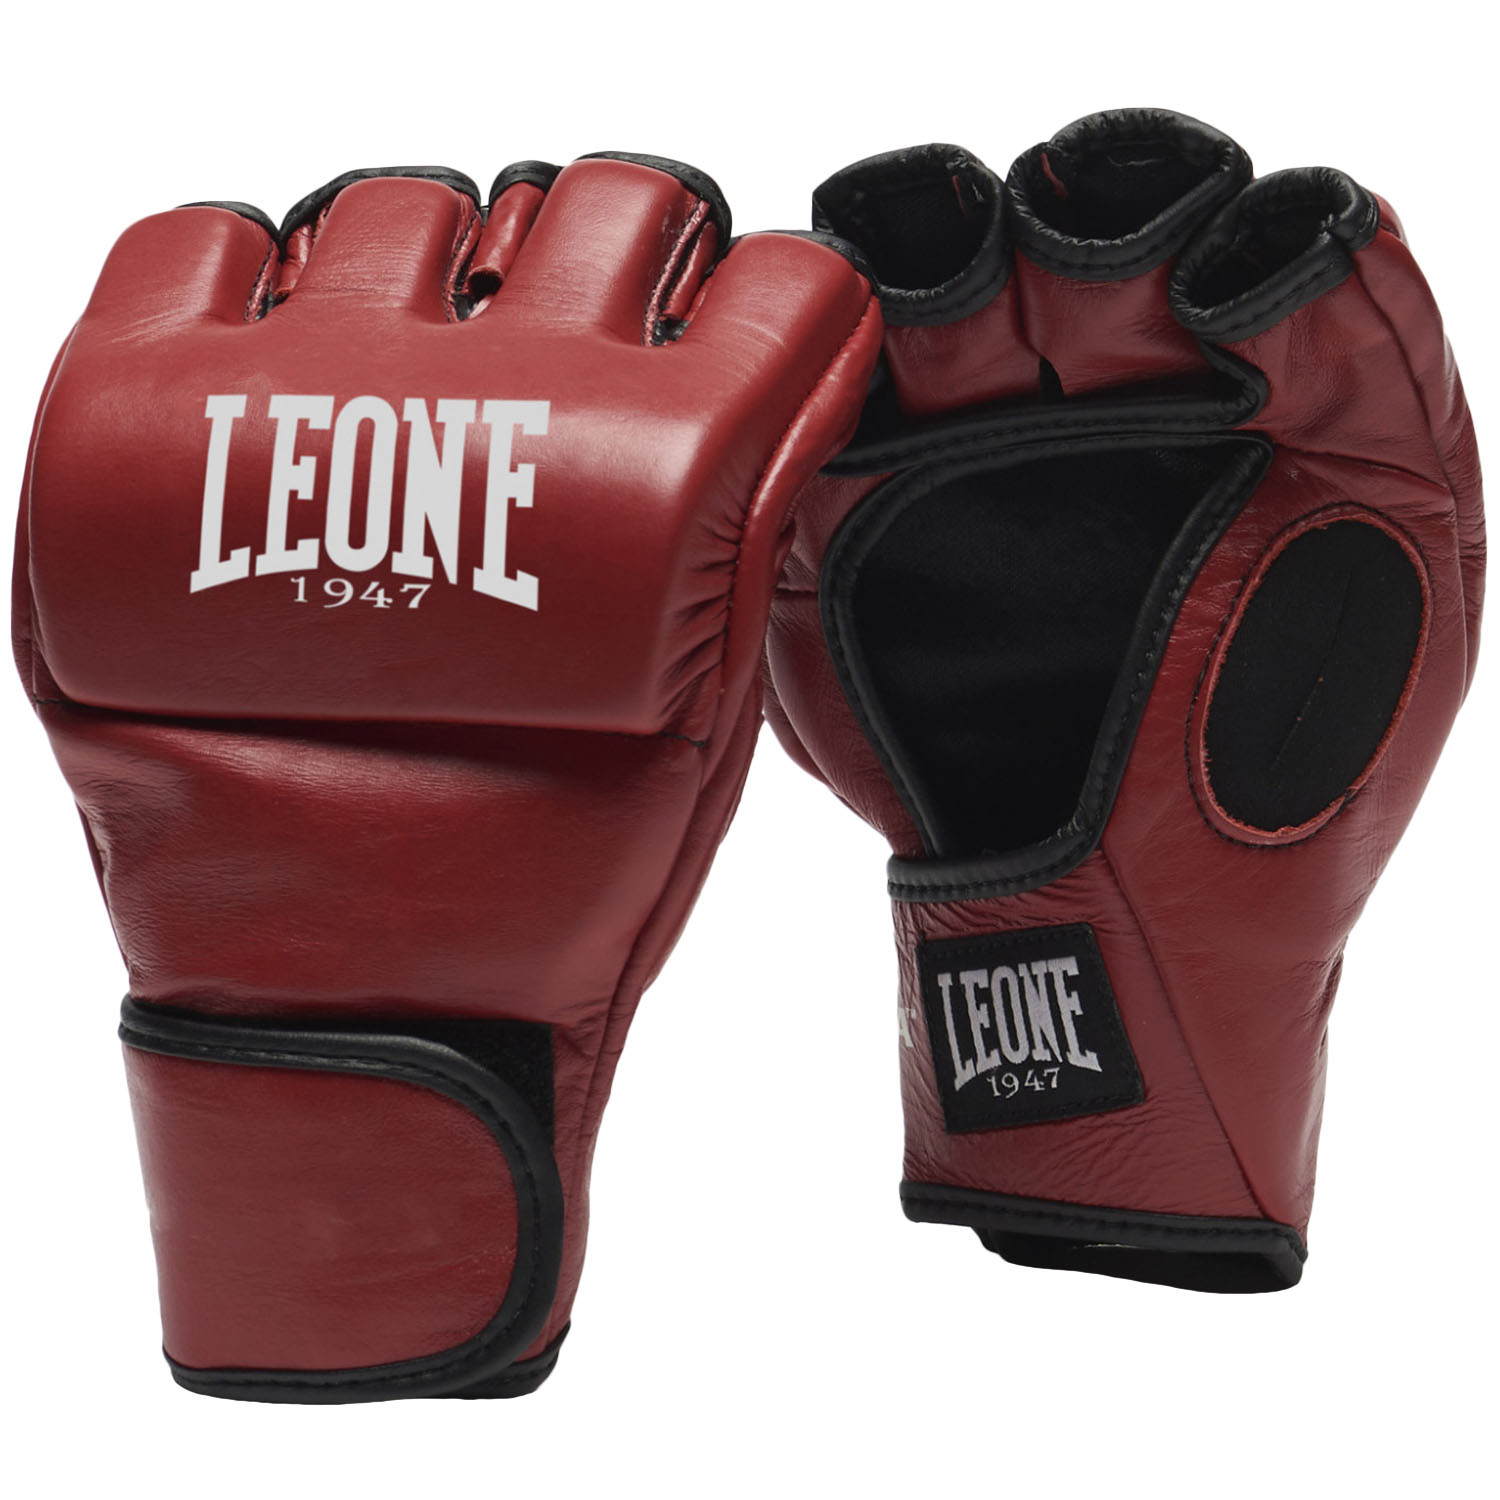 LEONE MMA Boxing Gloves, Contest, GP115, red, S